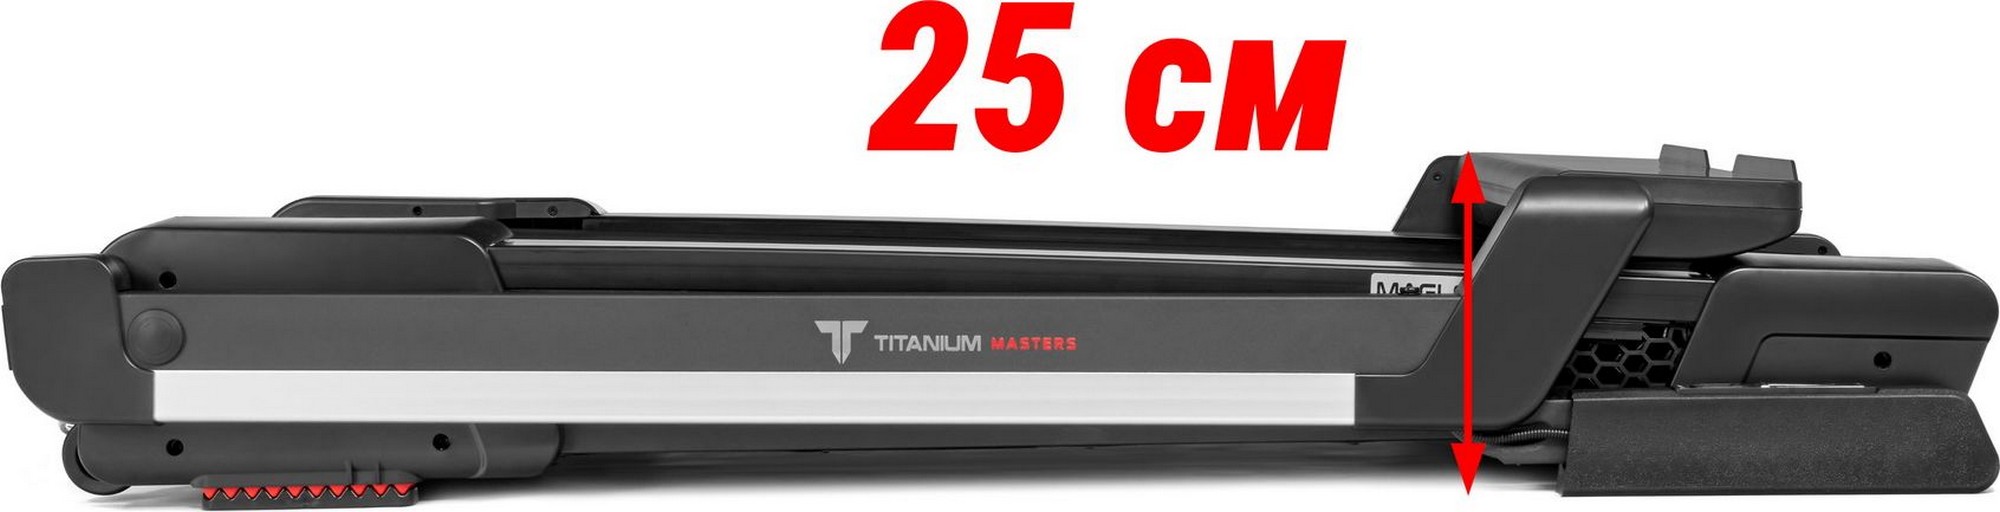 Беговая дорожка Titanium Masters Maglev M220 2000_512